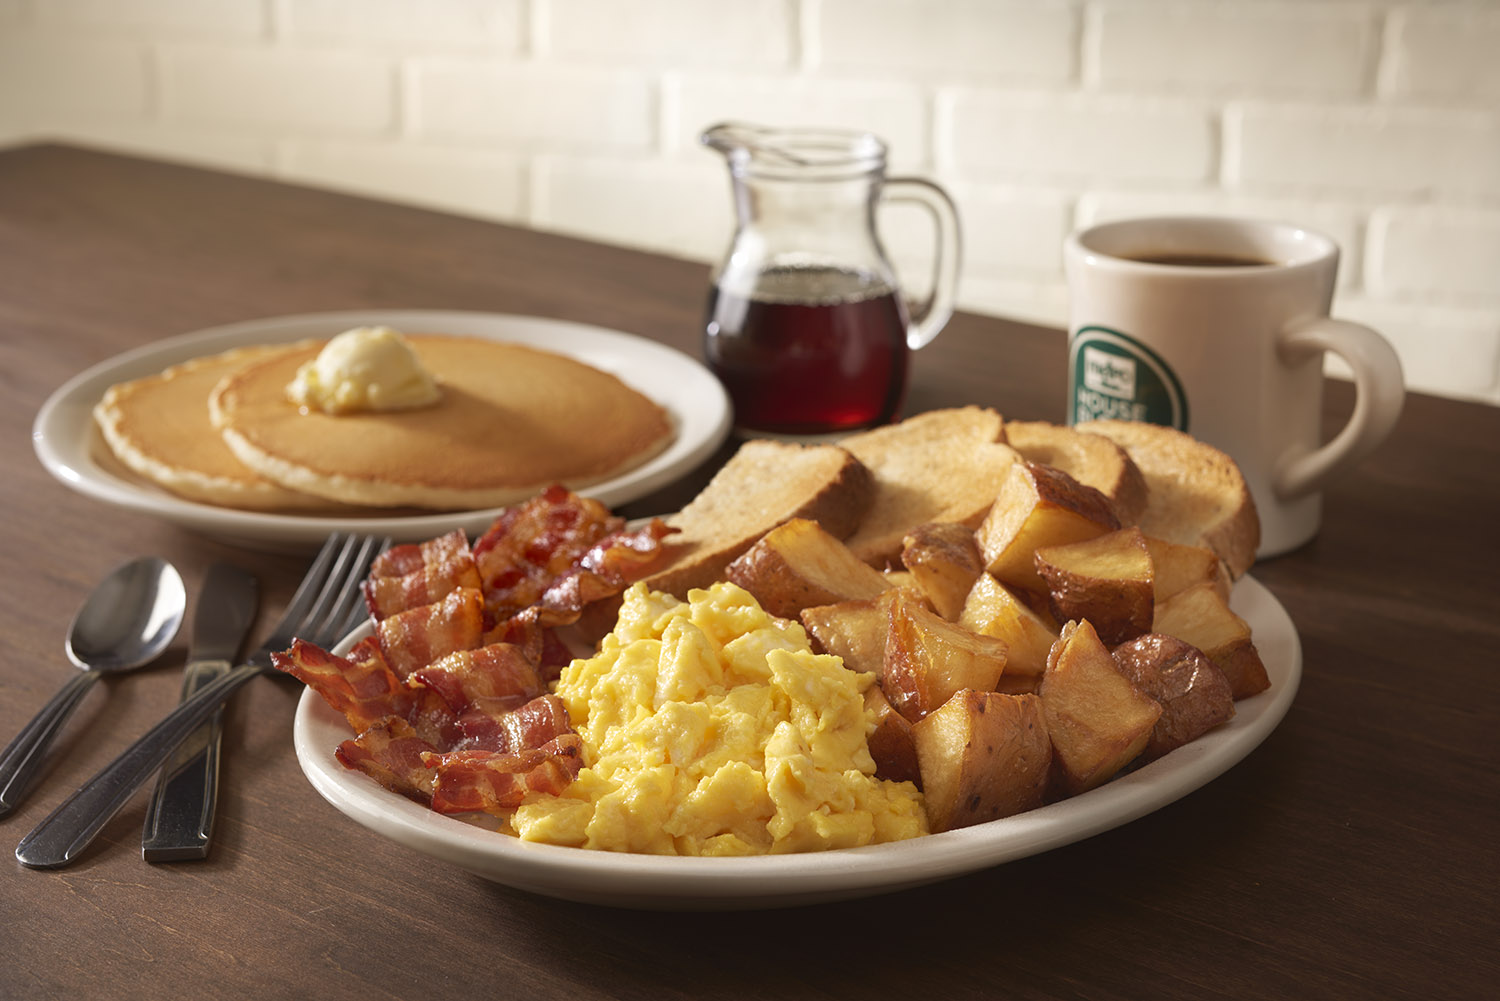 Breakfast us. Американ Брекфаст. Завтрак. Традиционный американский завтрак. Американский завтрак в отеле что это.